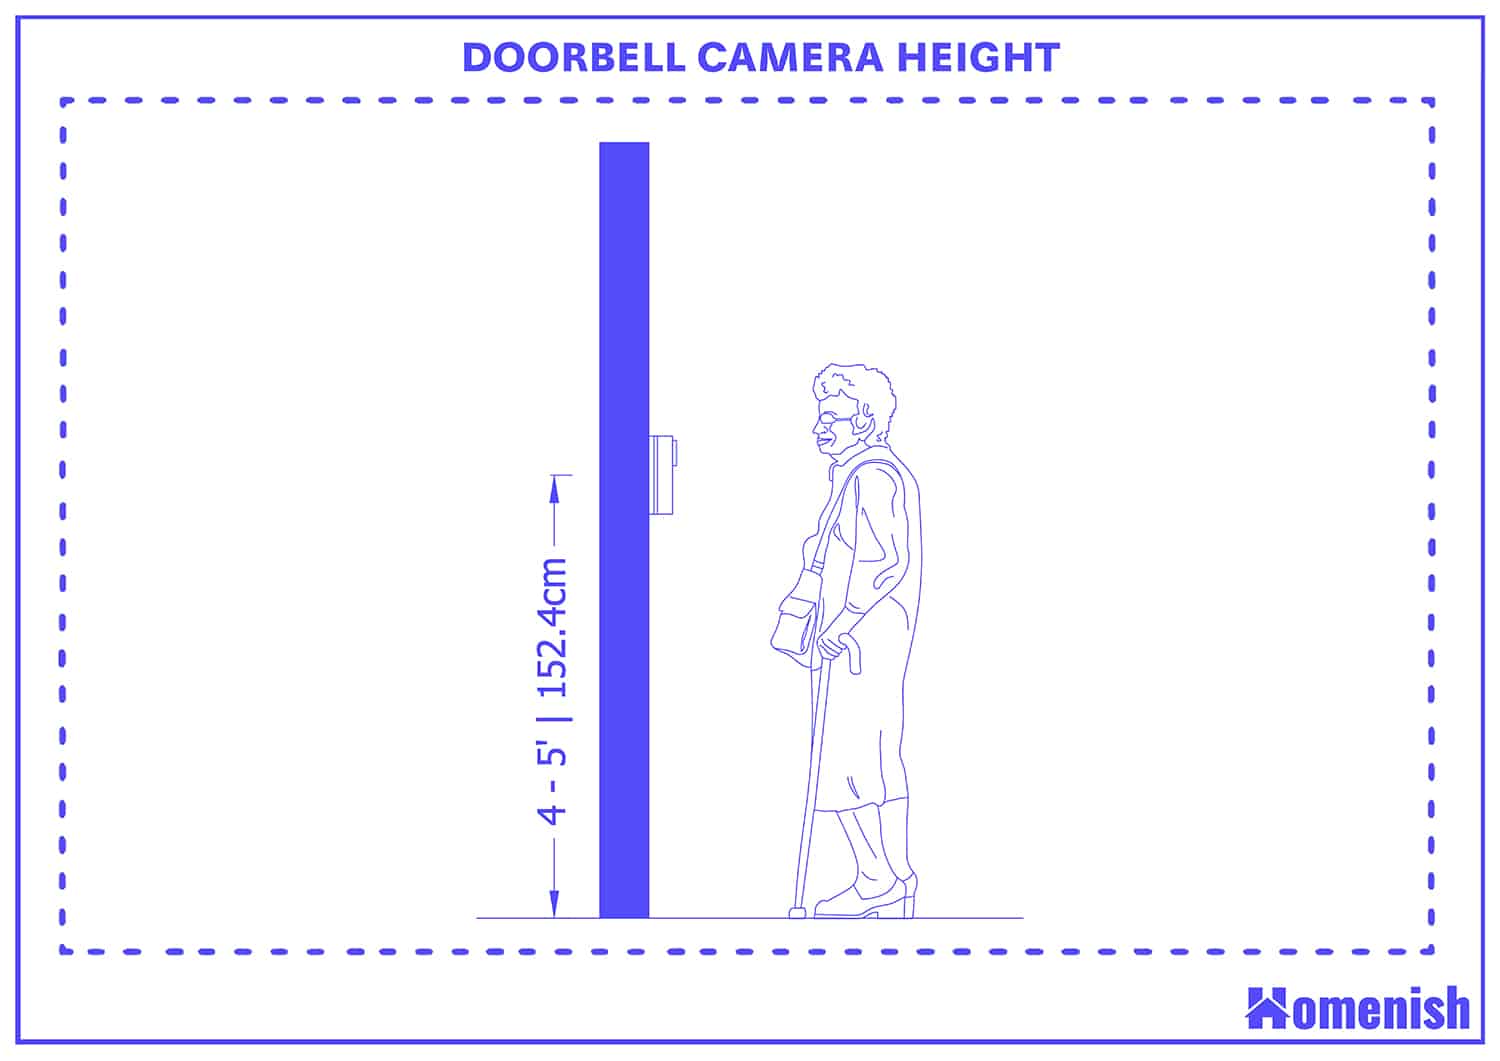 Doorbell camera height